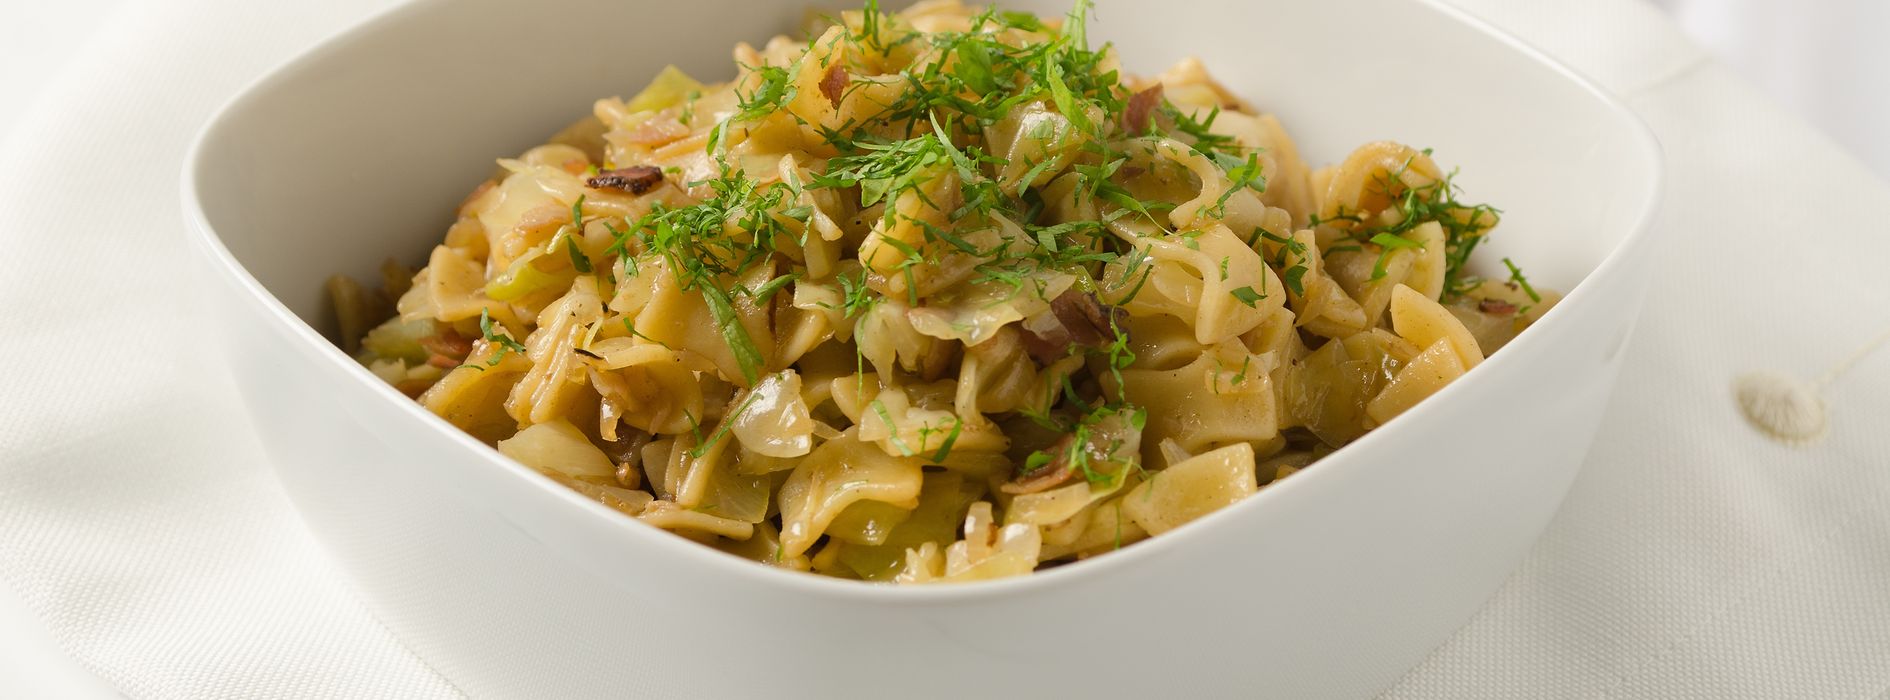 Krautfleckerl (cabbage and pasta)